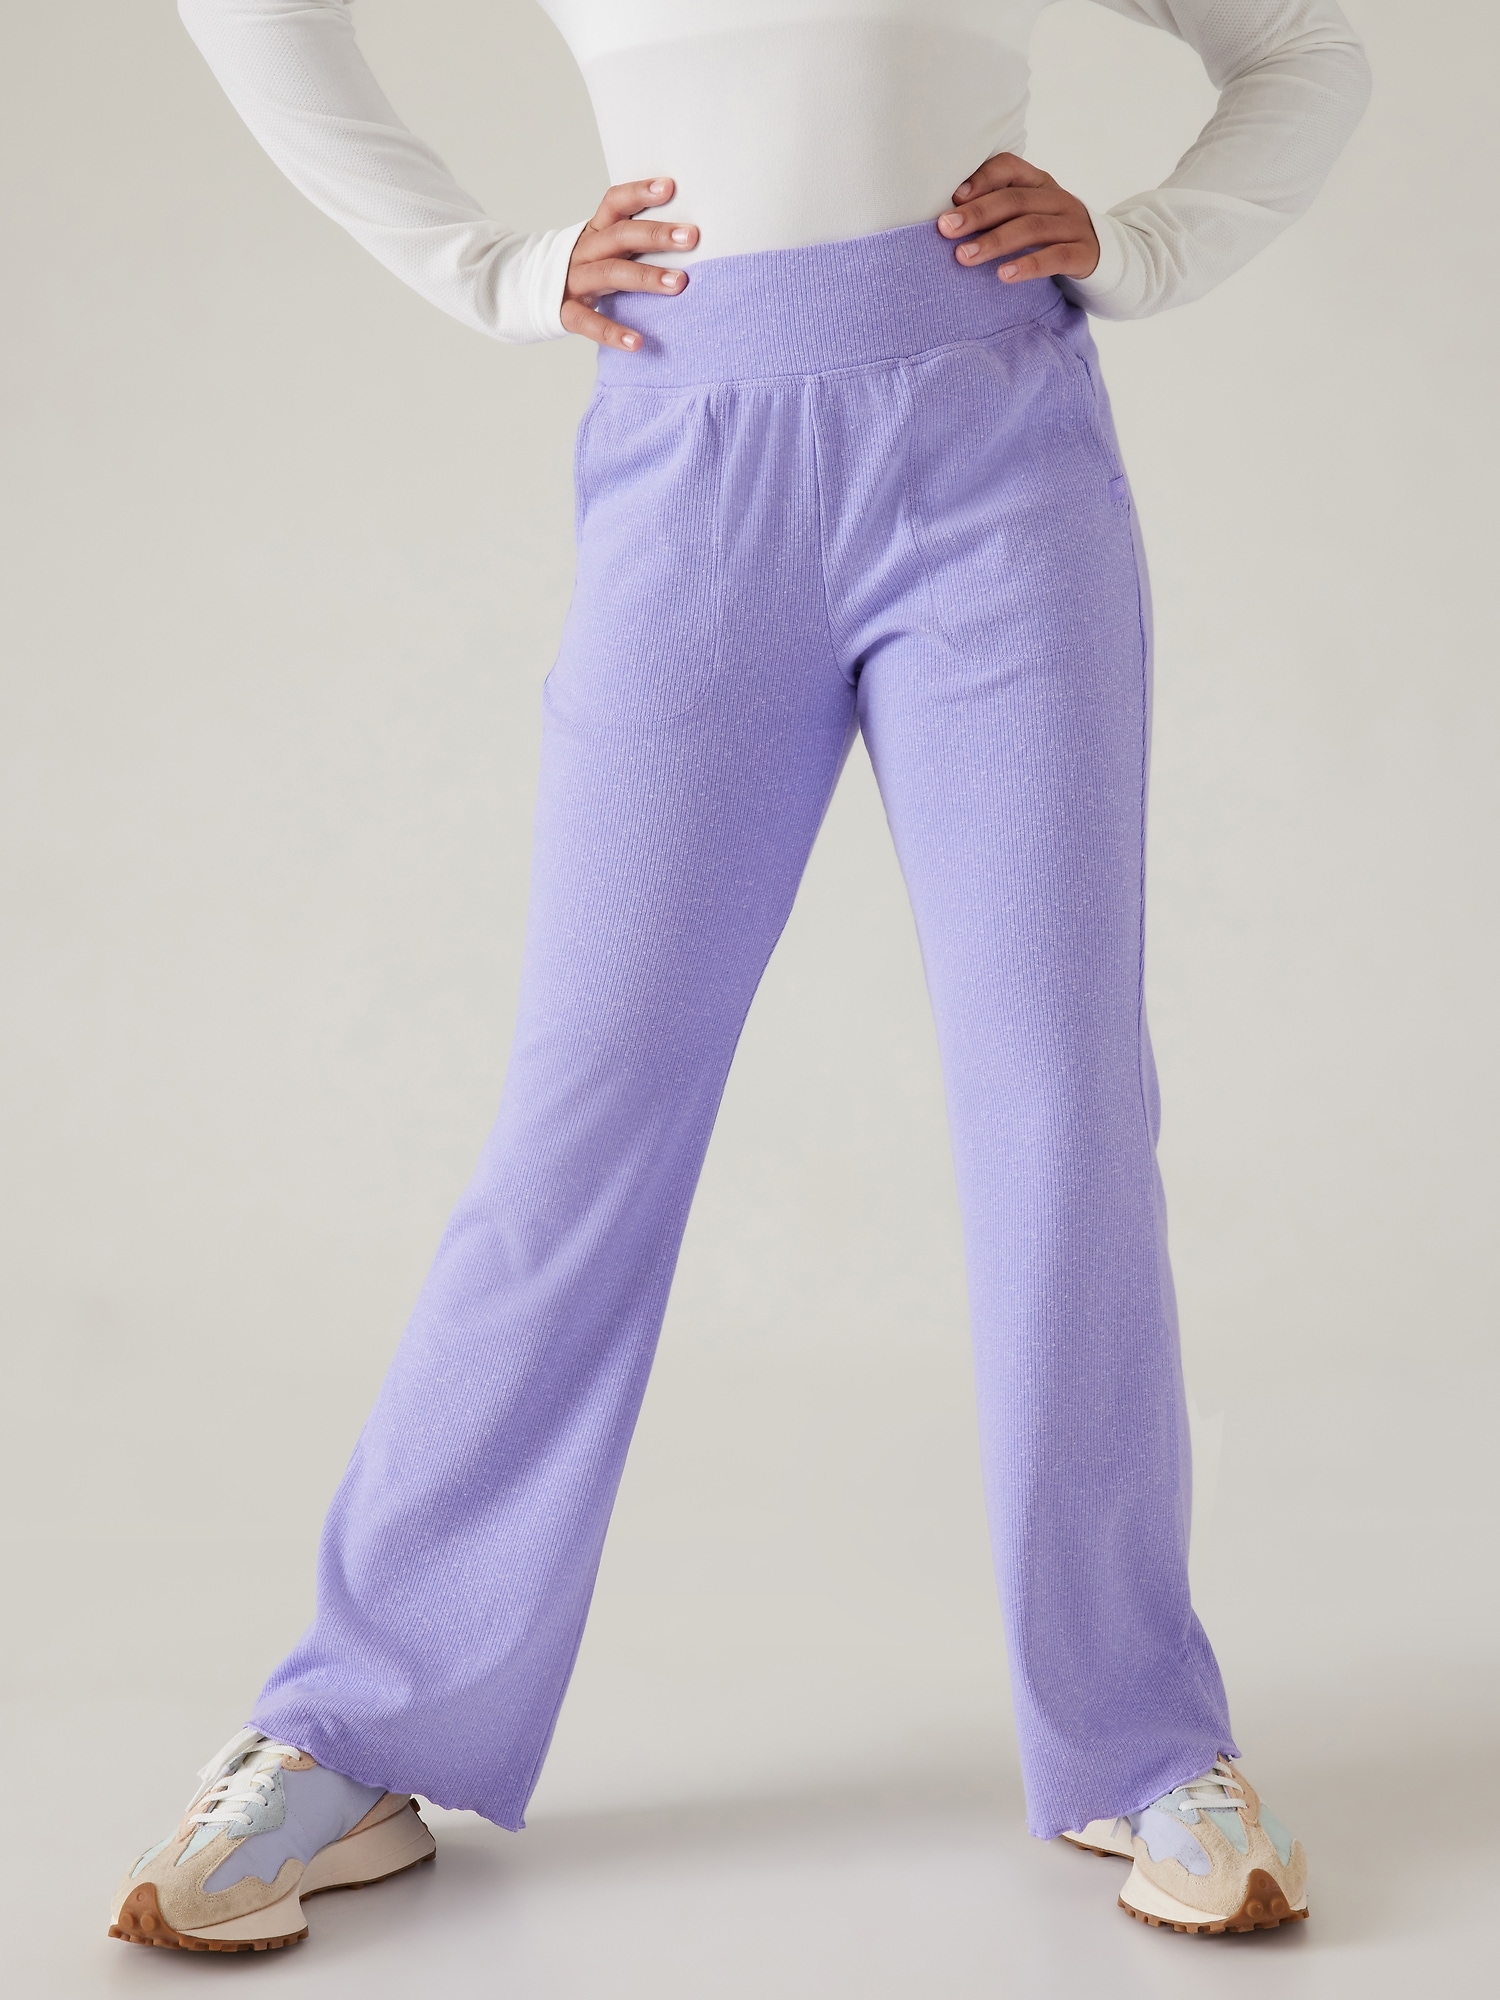 NEW ✨Athleta Stride Pant Large Purple Stretch Wide Leg Women's